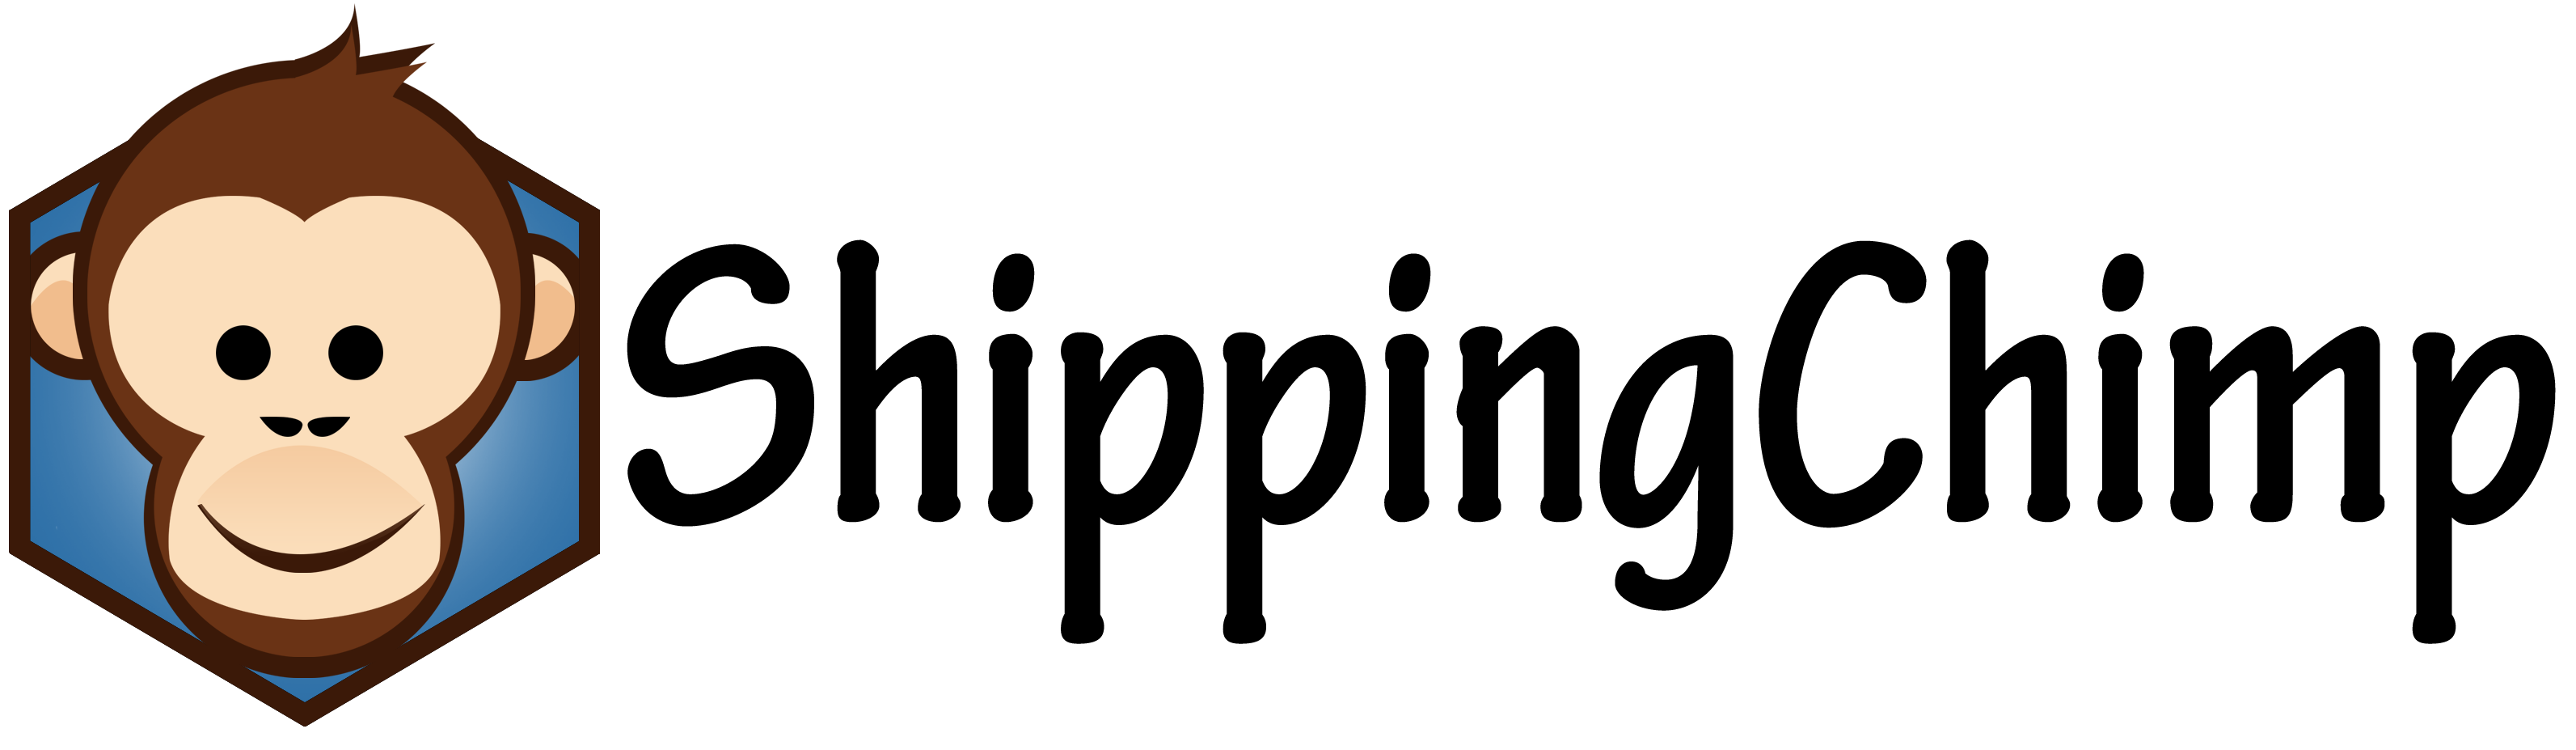 shippingchimp logo